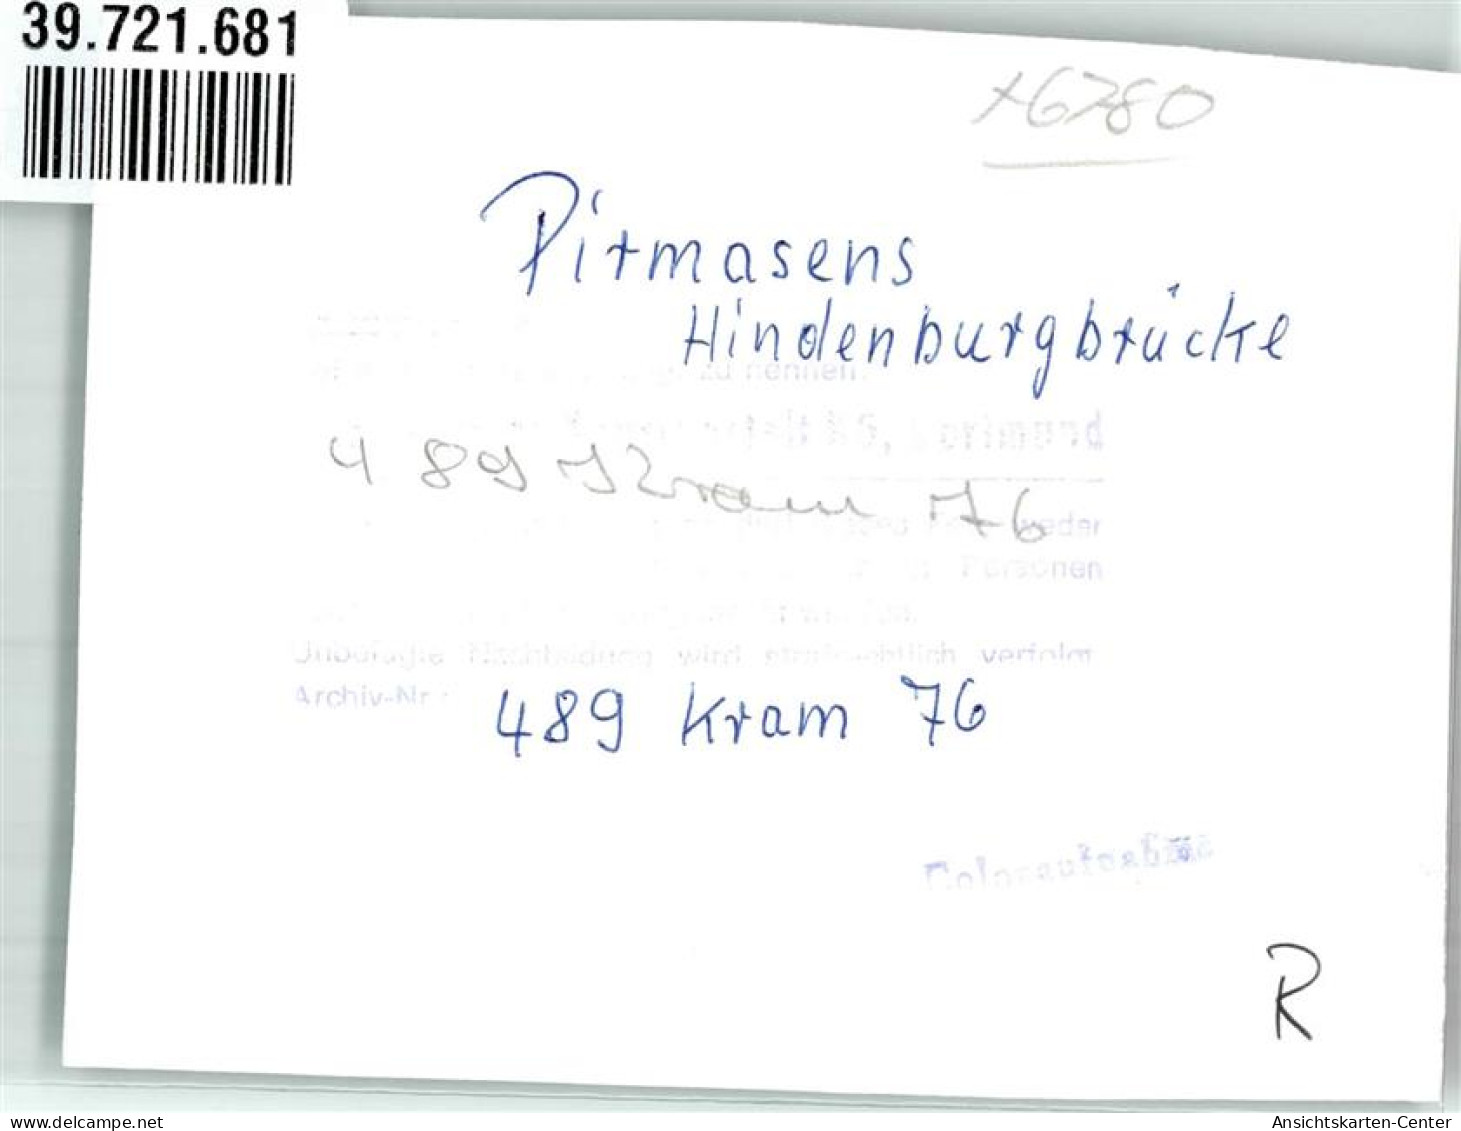 39721681 - Pirmasens - Pirmasens